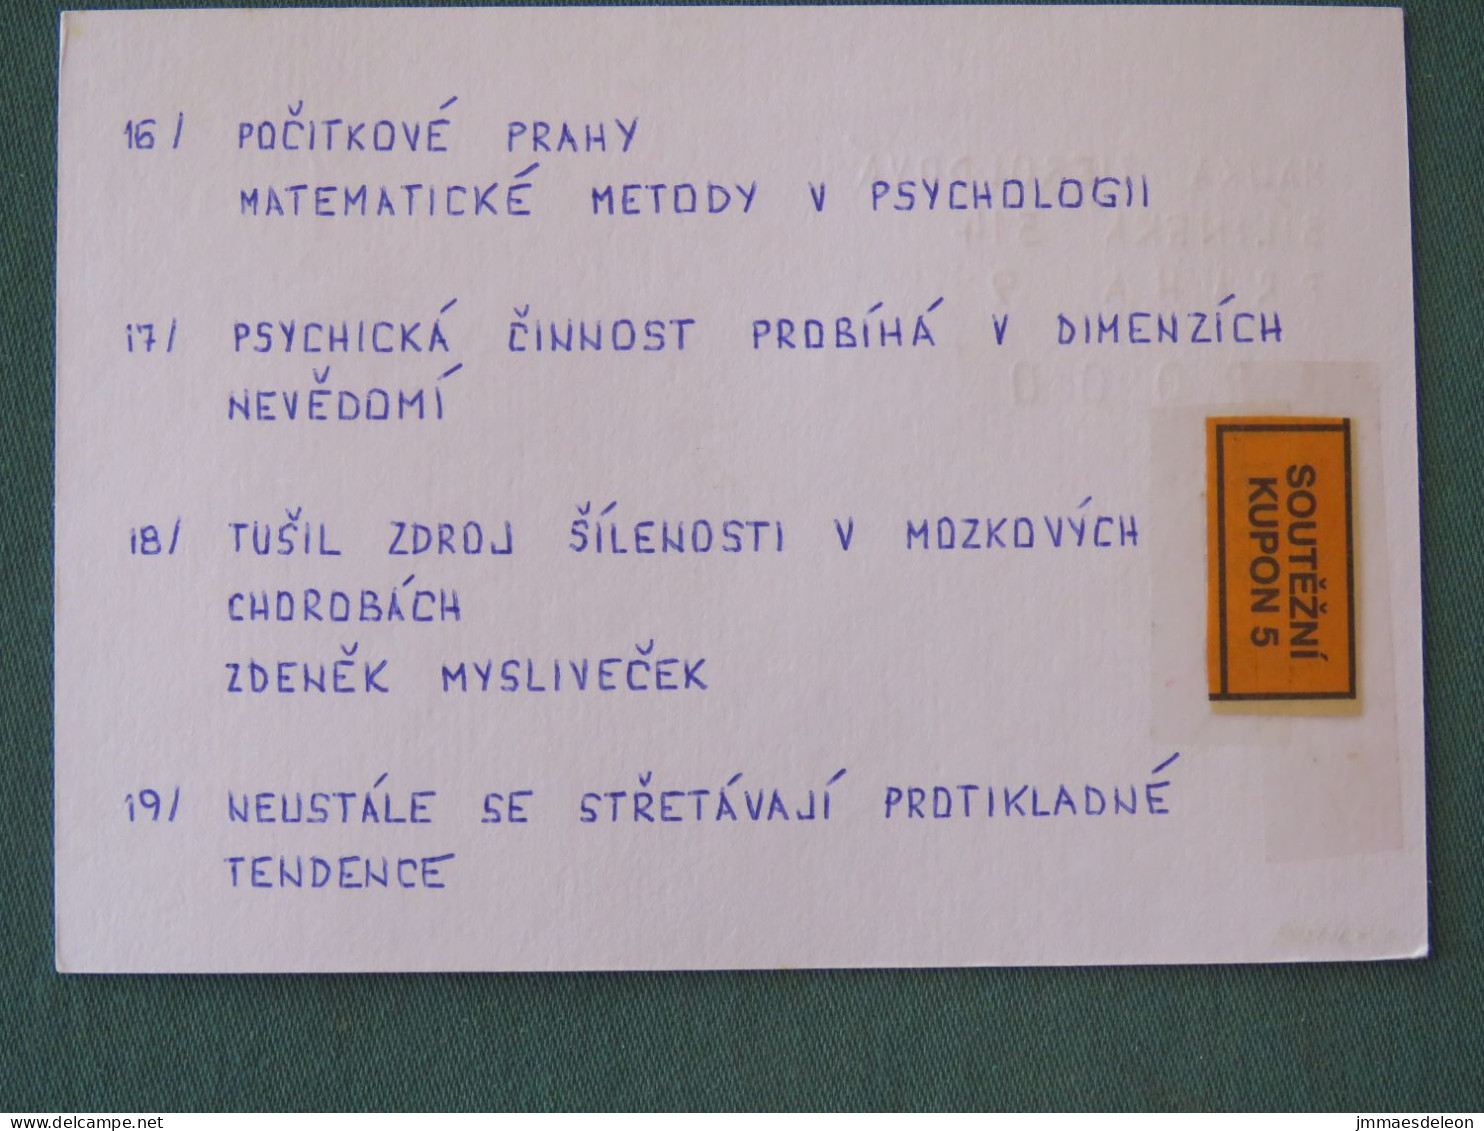 Czech Republic 2001 Stationery Postcard 5.40 Kcs Prague Sent Locally From Prague, EMS Slogan - Lettres & Documents